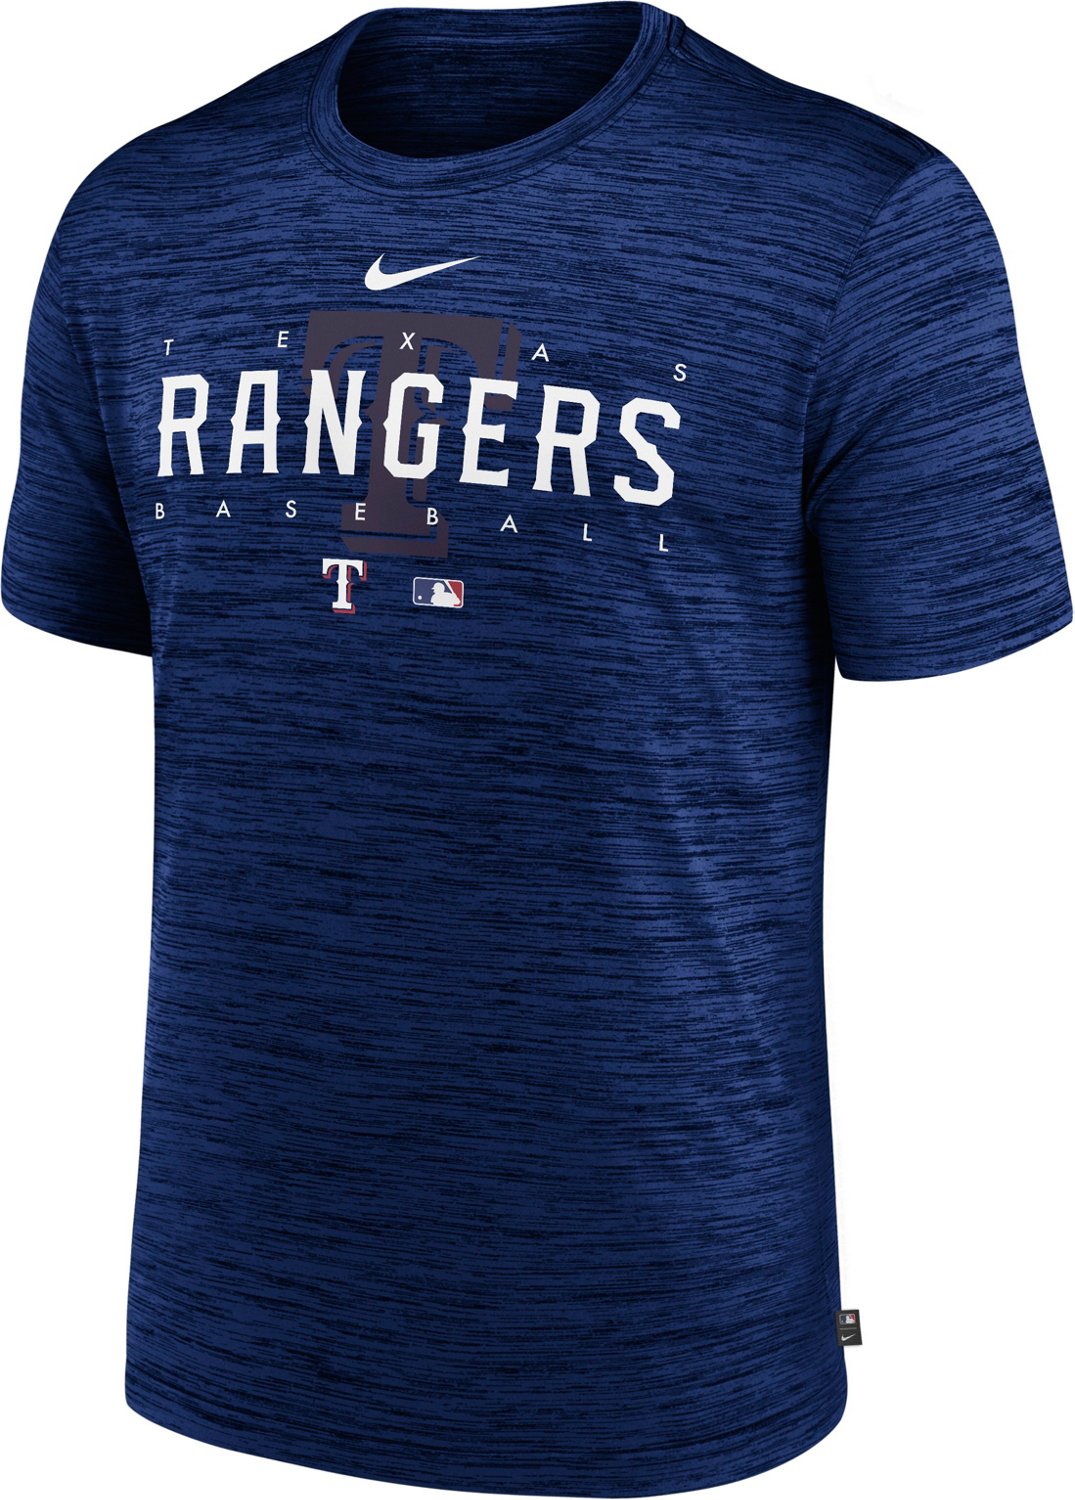 Nike Dri-Fit Texas Rangers T-Shirt (Small)